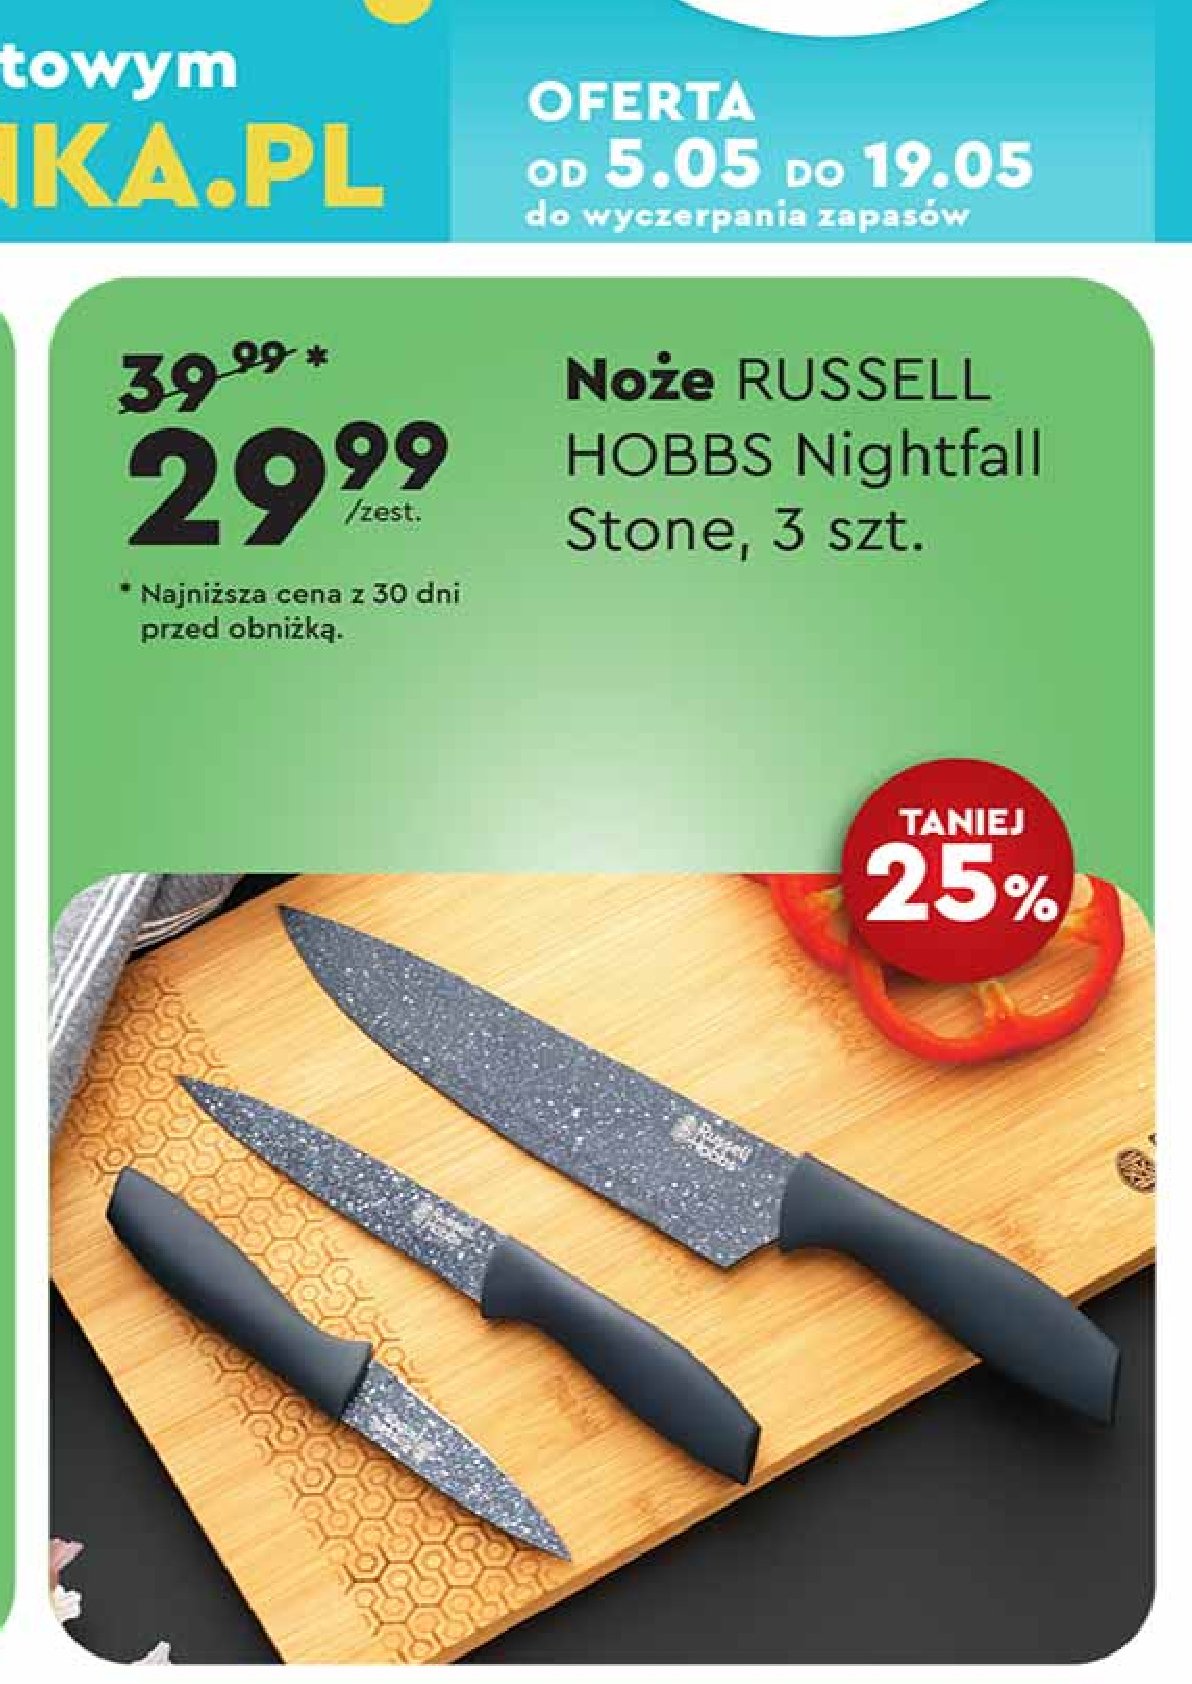 Noże nightfall stone Russell hobbs promocja